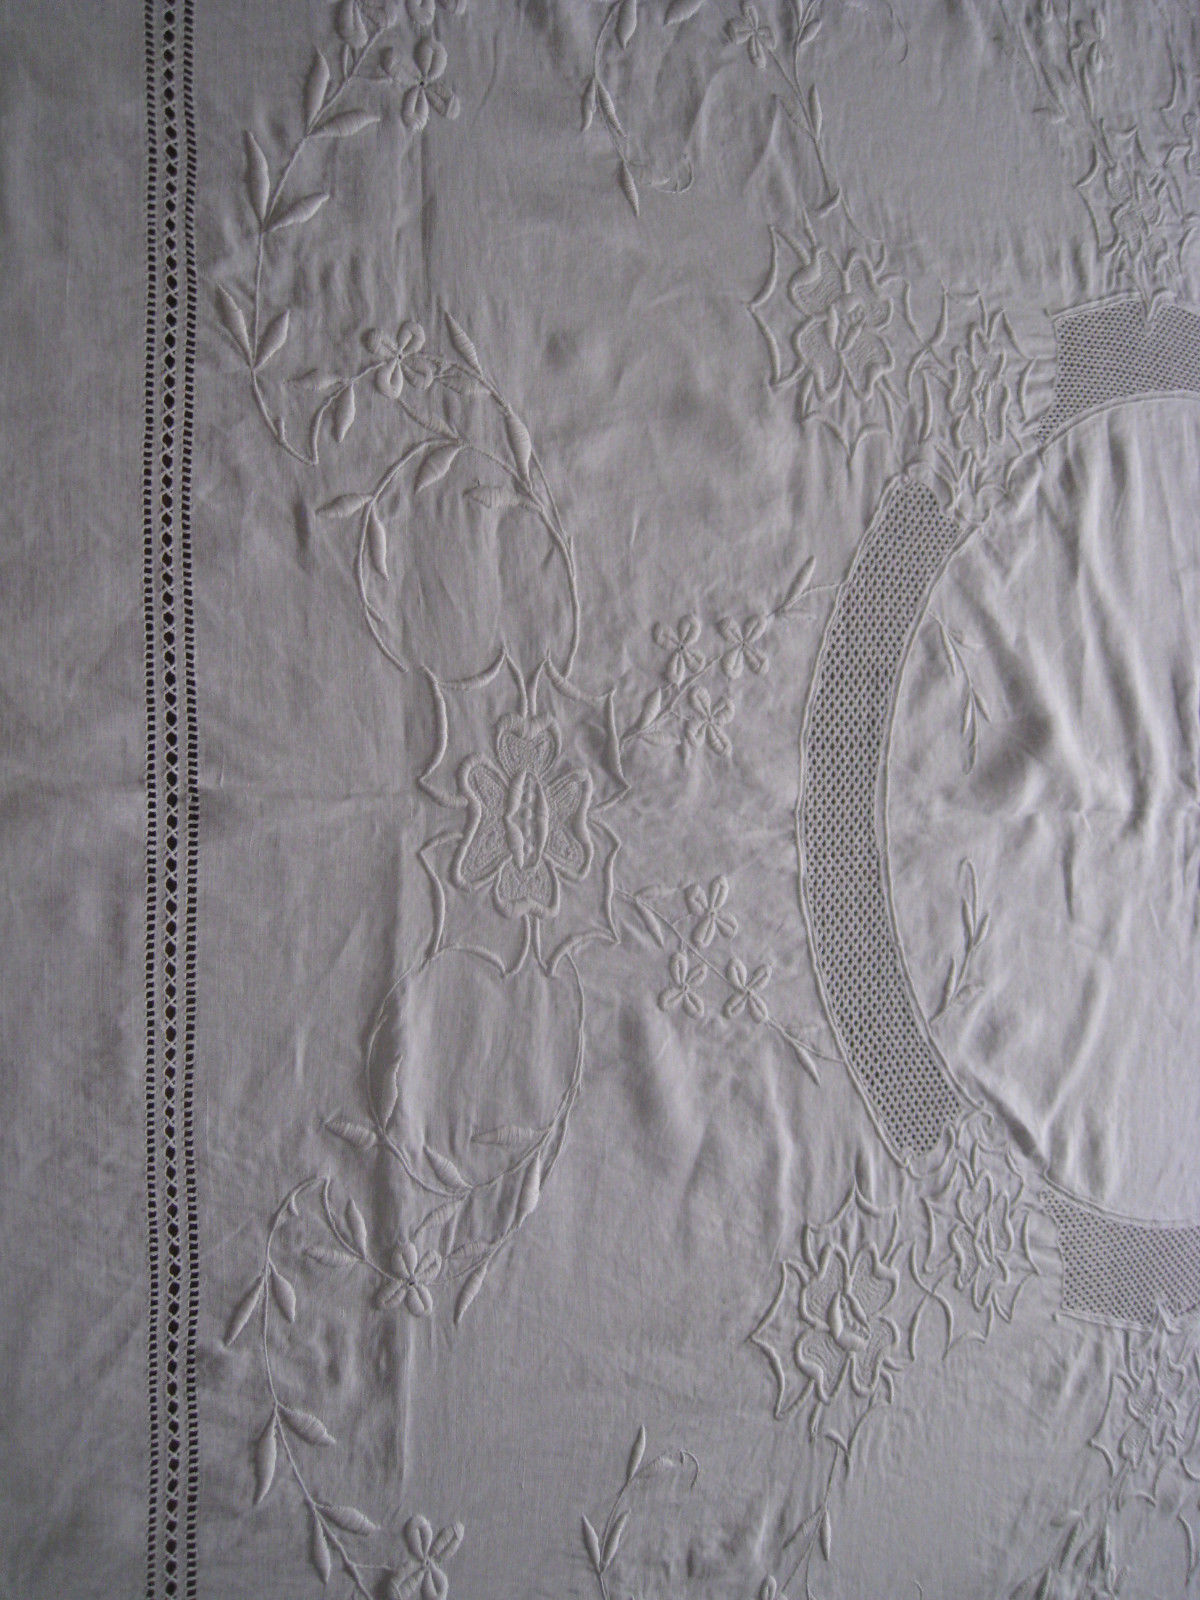 Vintage Antique  EMBROIDERED POINT DE VENISE Linen Tablecloth 90x100 in.